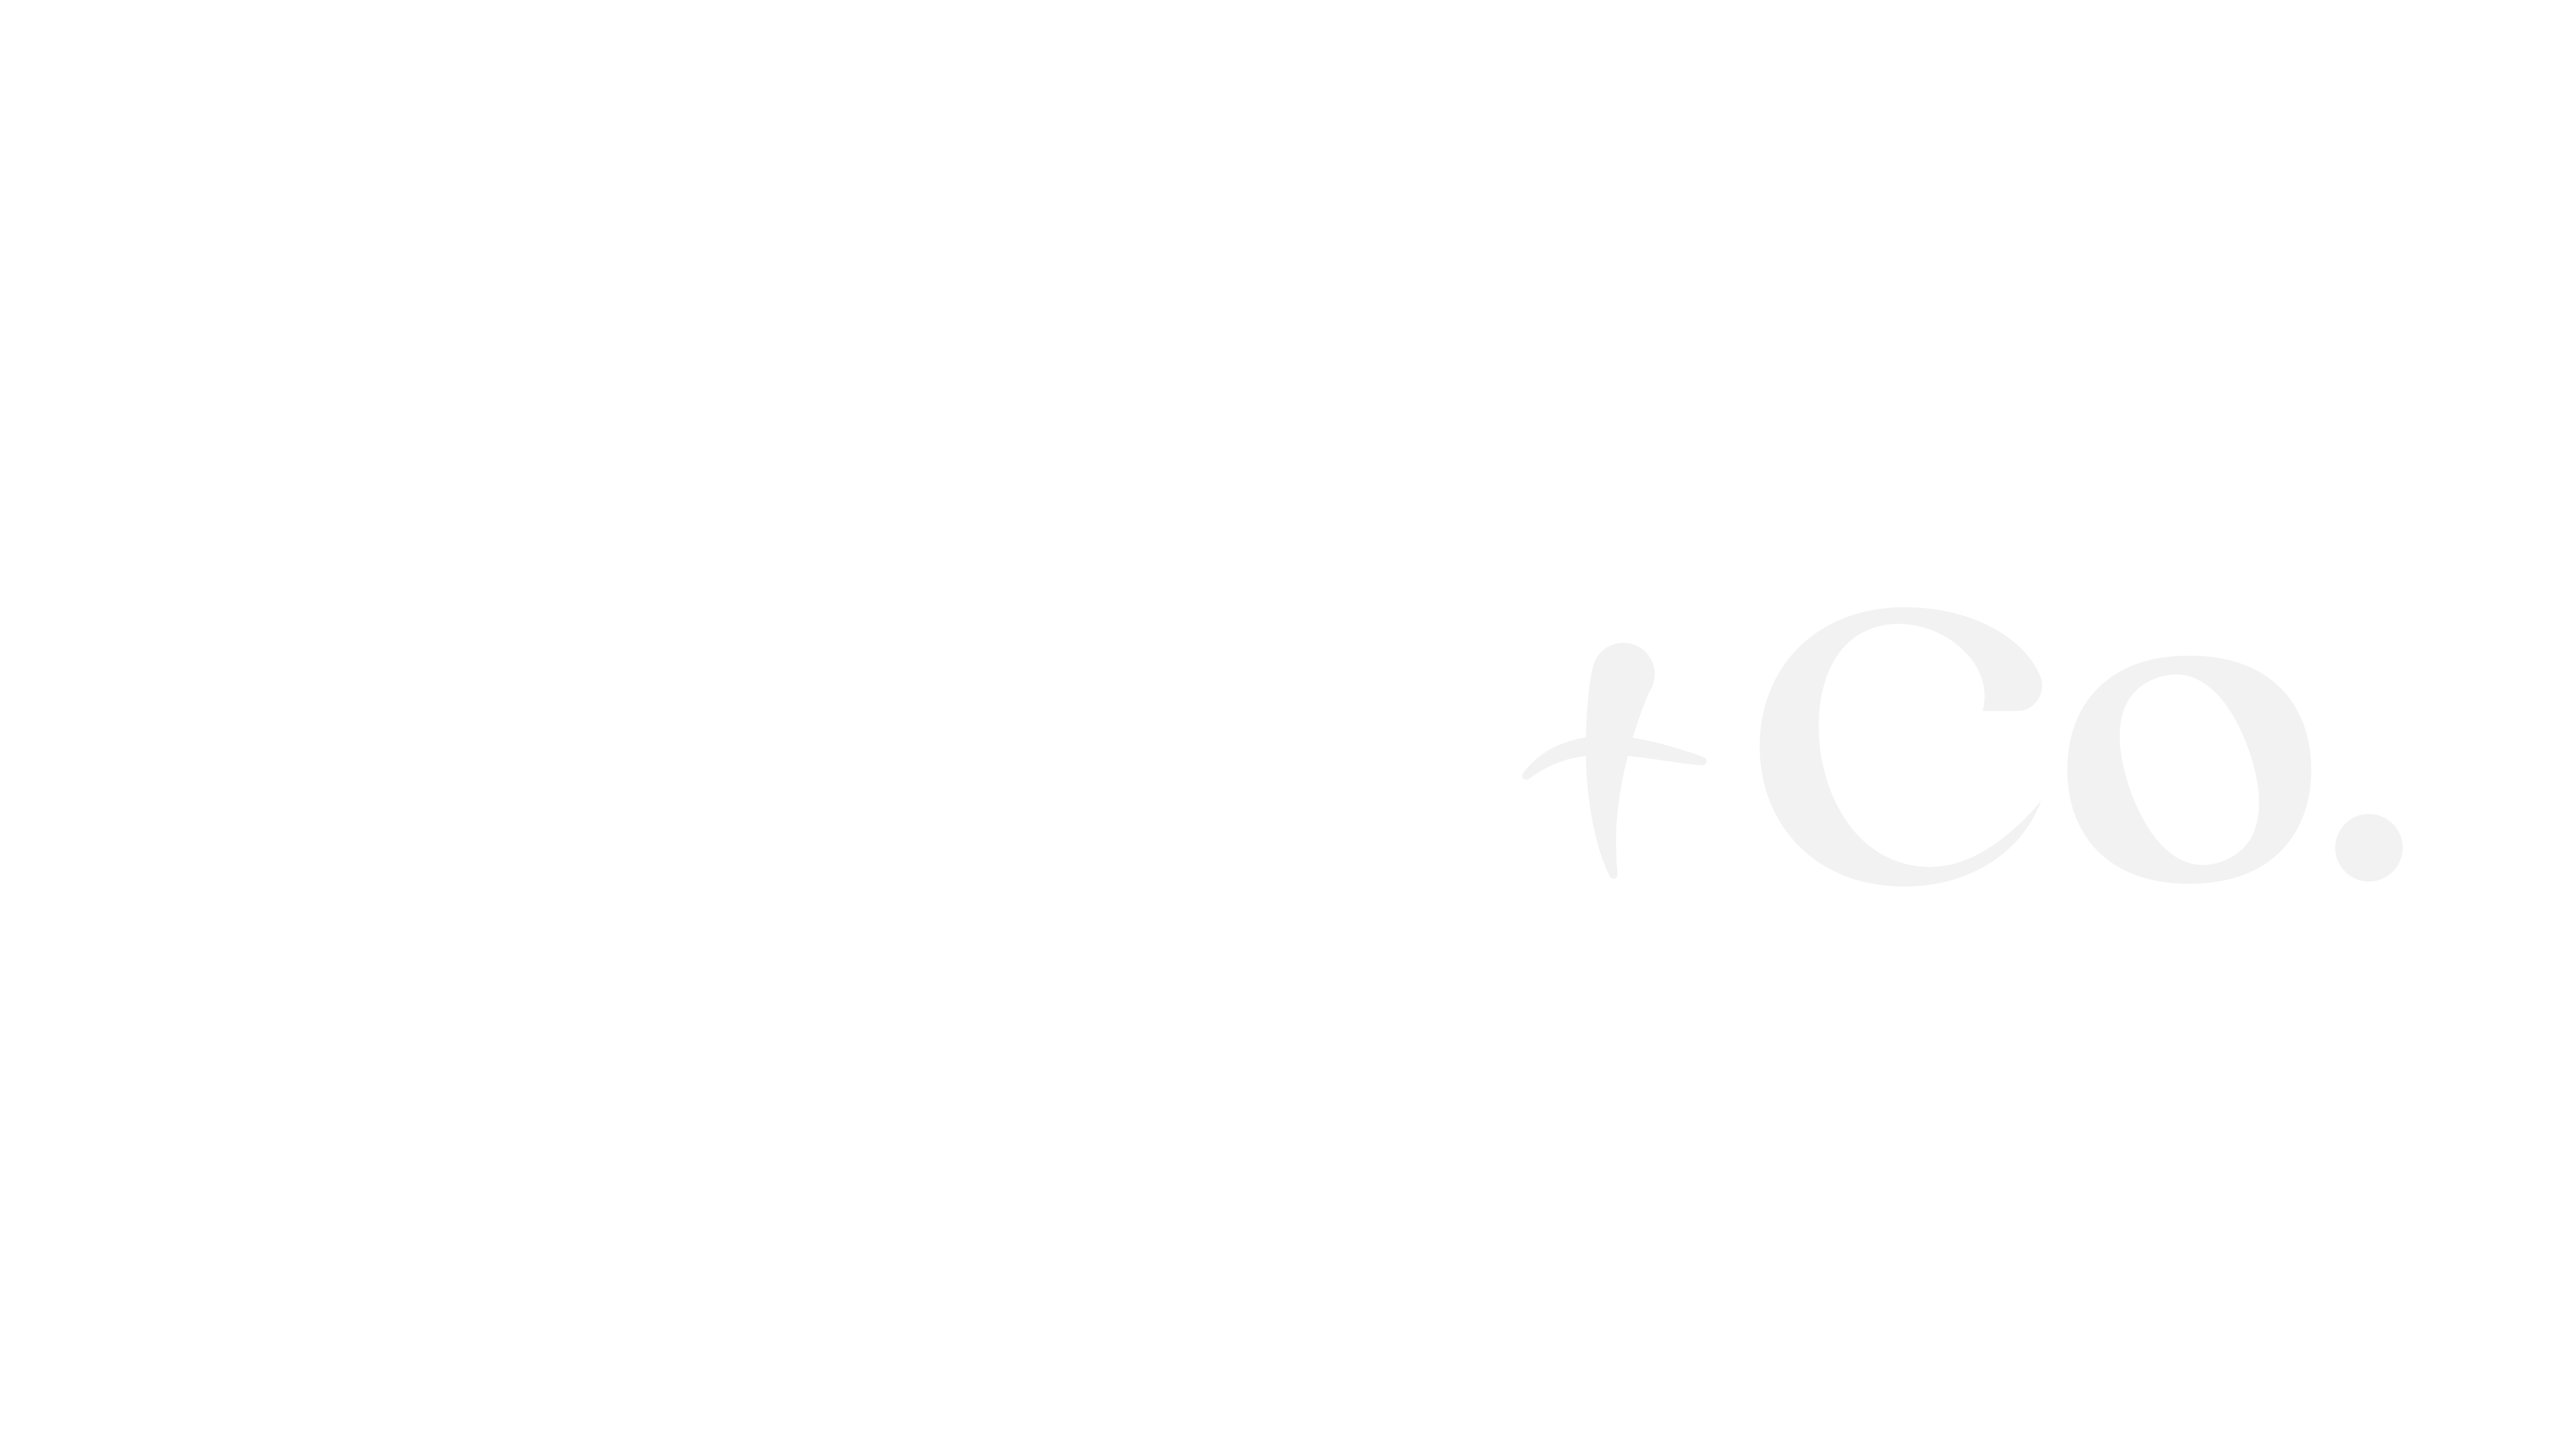 Fletch & Co. Marketing